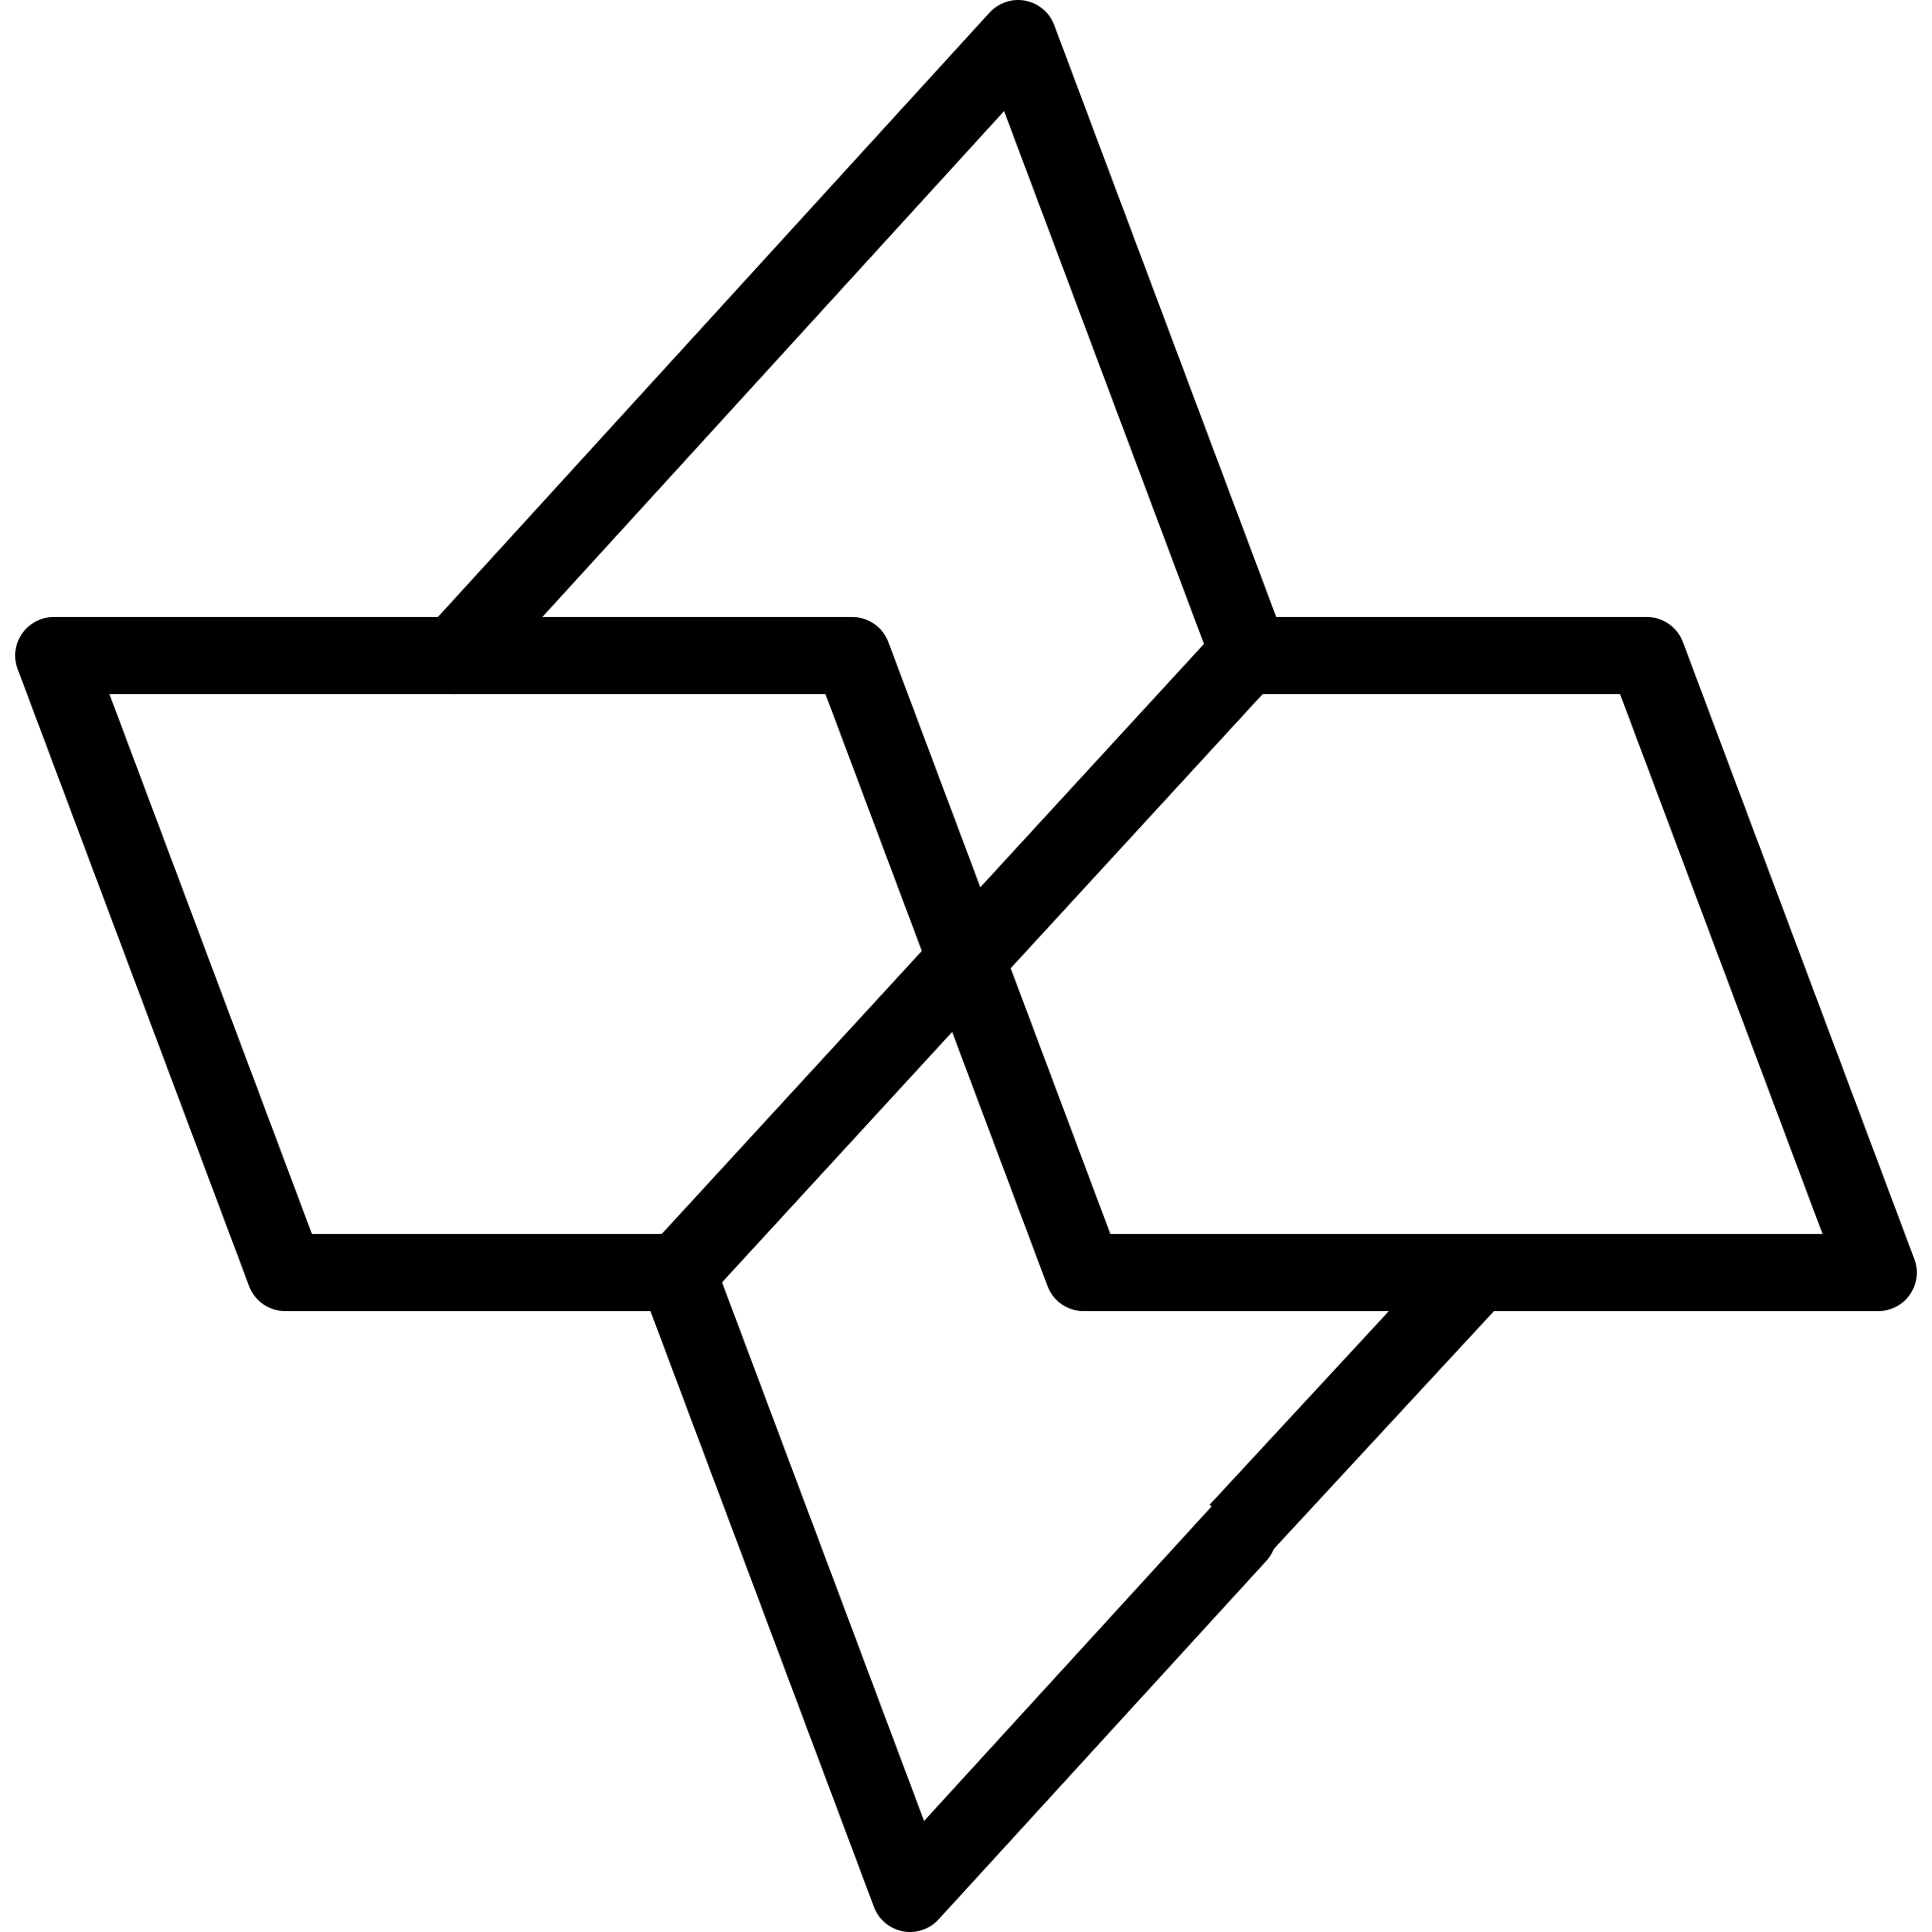 Cartesi logo in png format